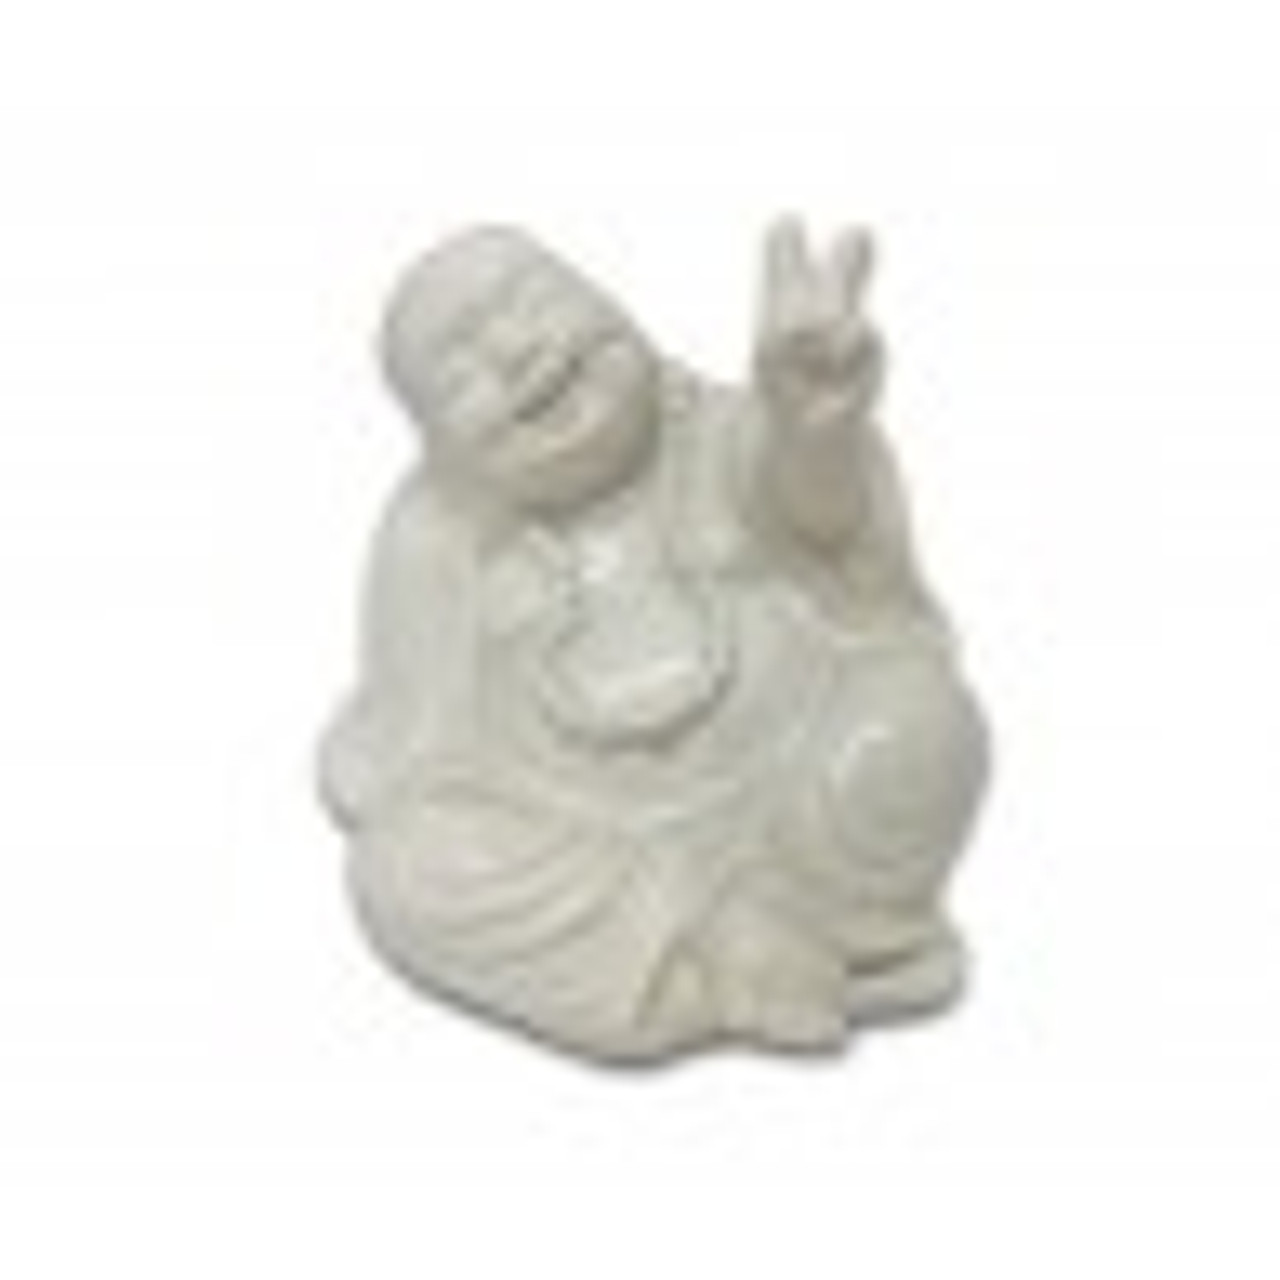 Buddha w/ Peace Sign - White Resin